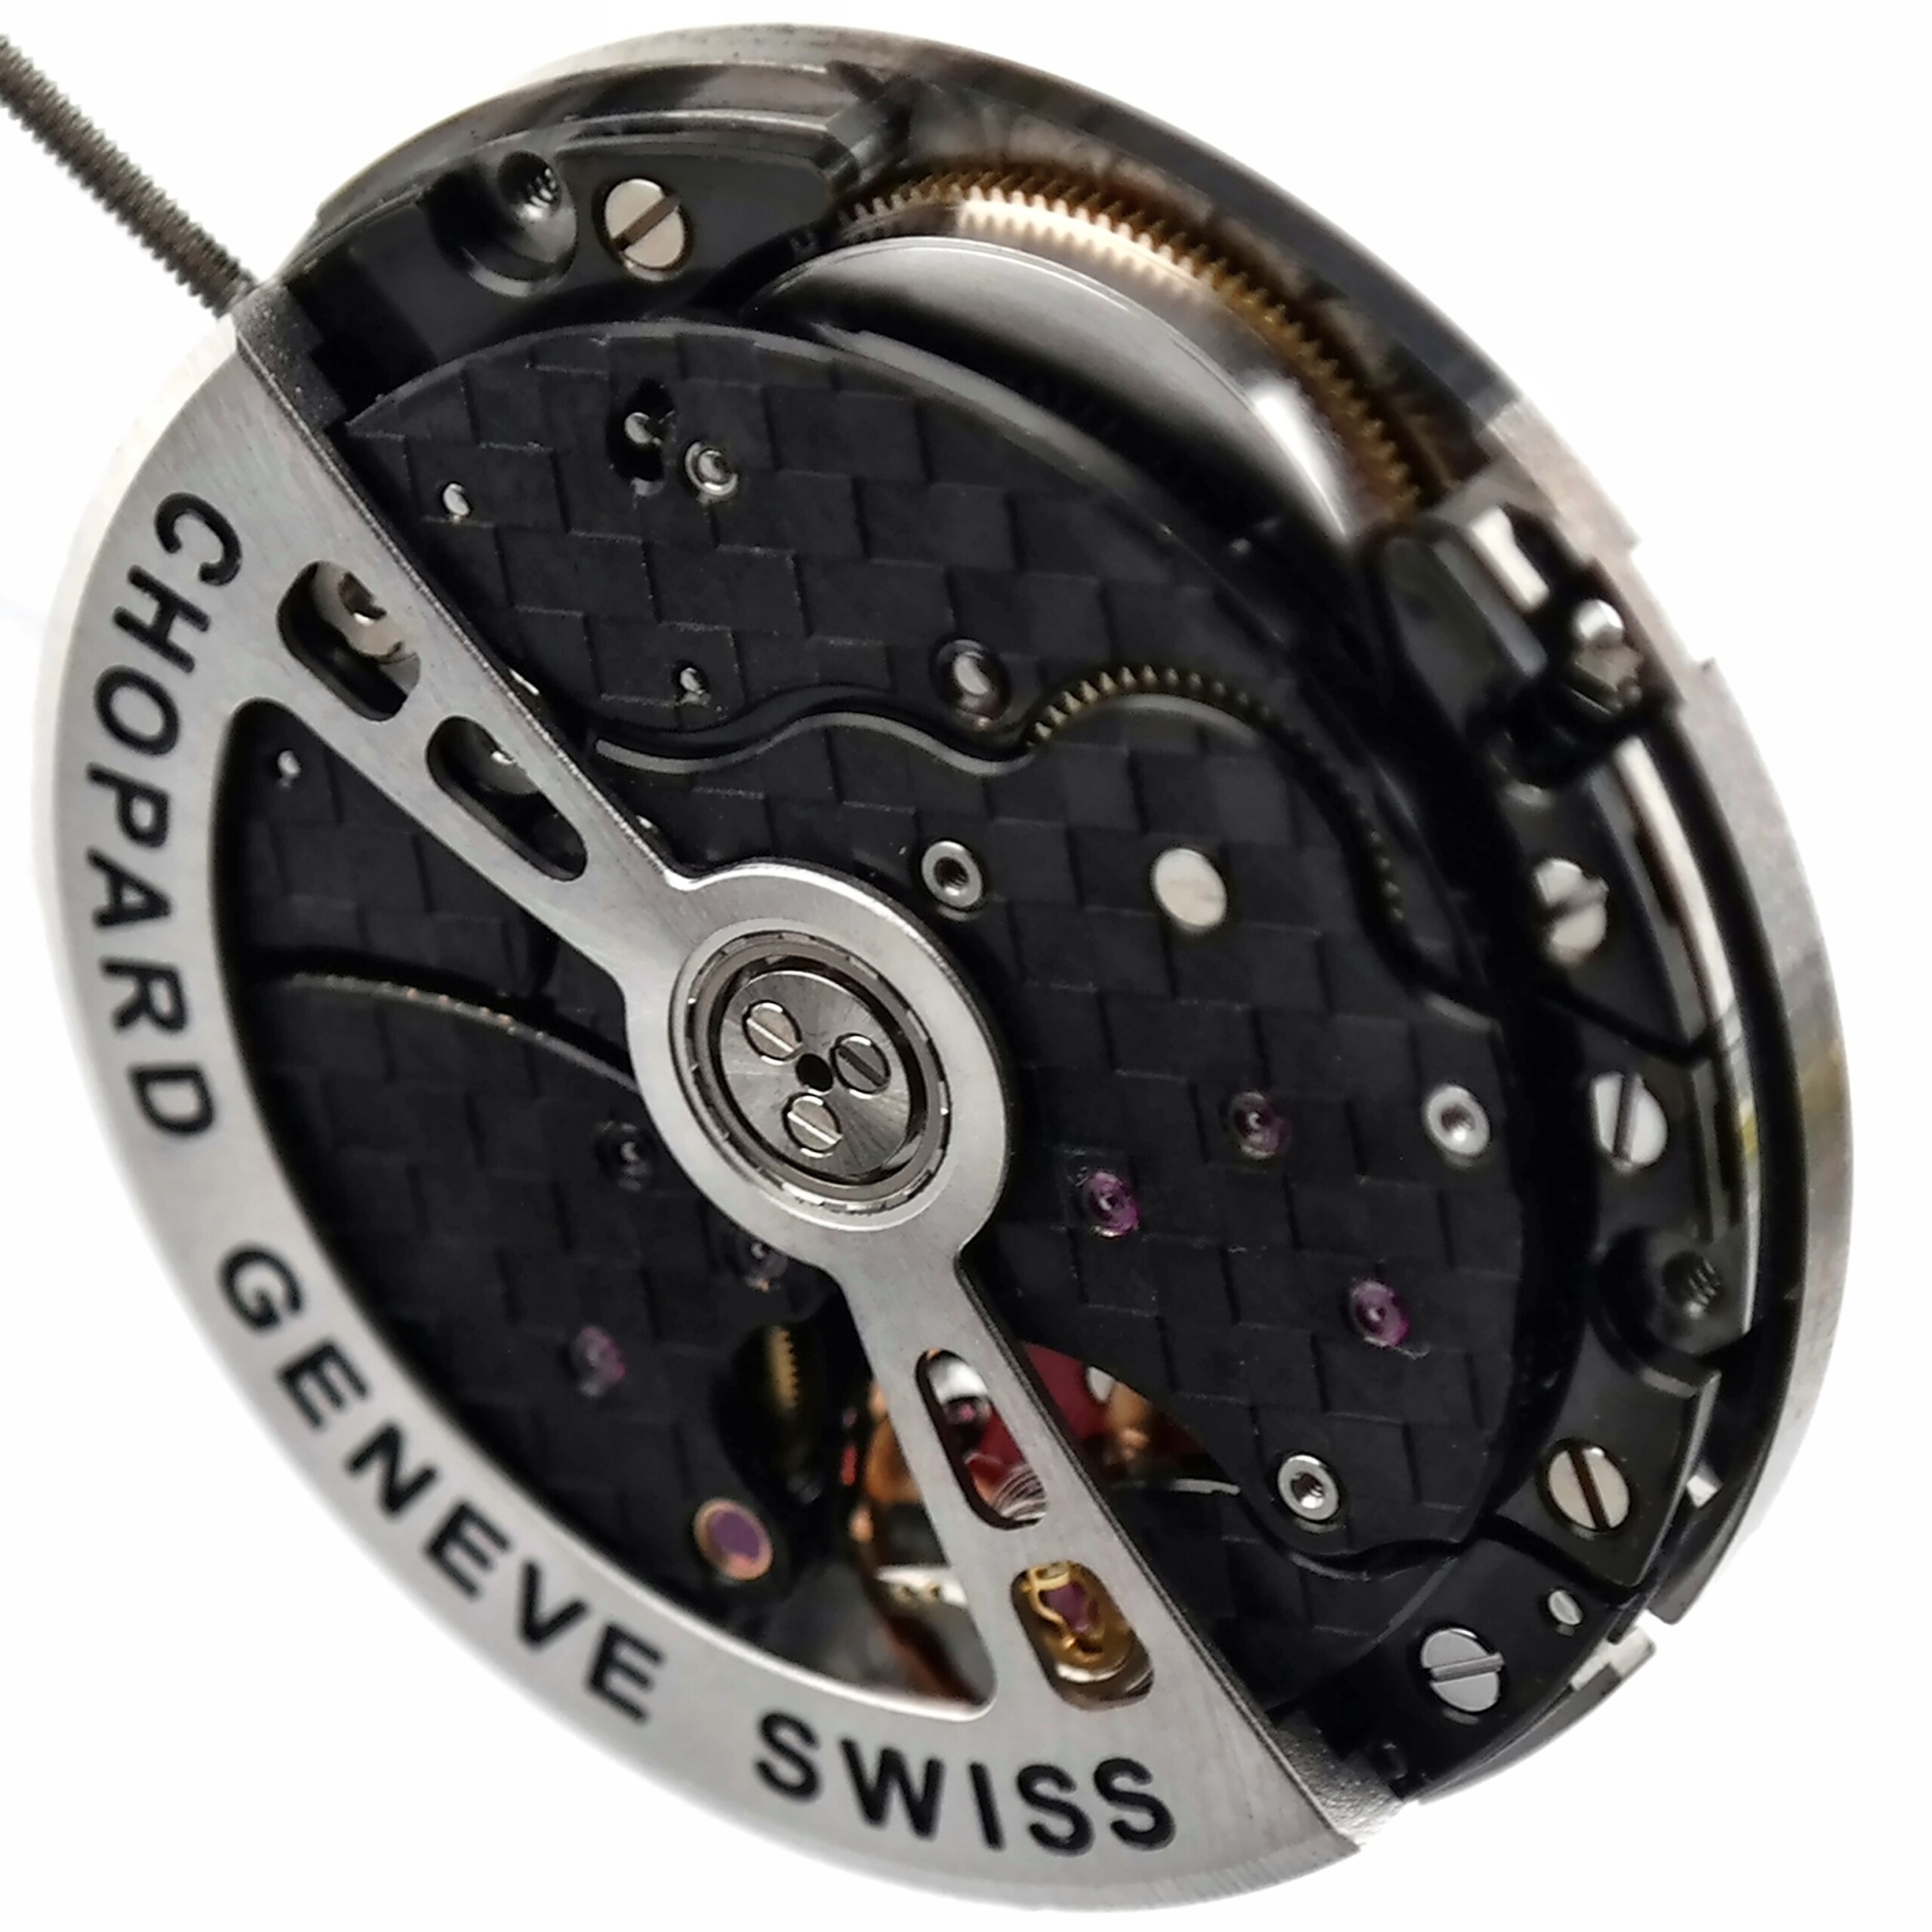 chopard calibre 01.01 m automatic chronometer watch movement